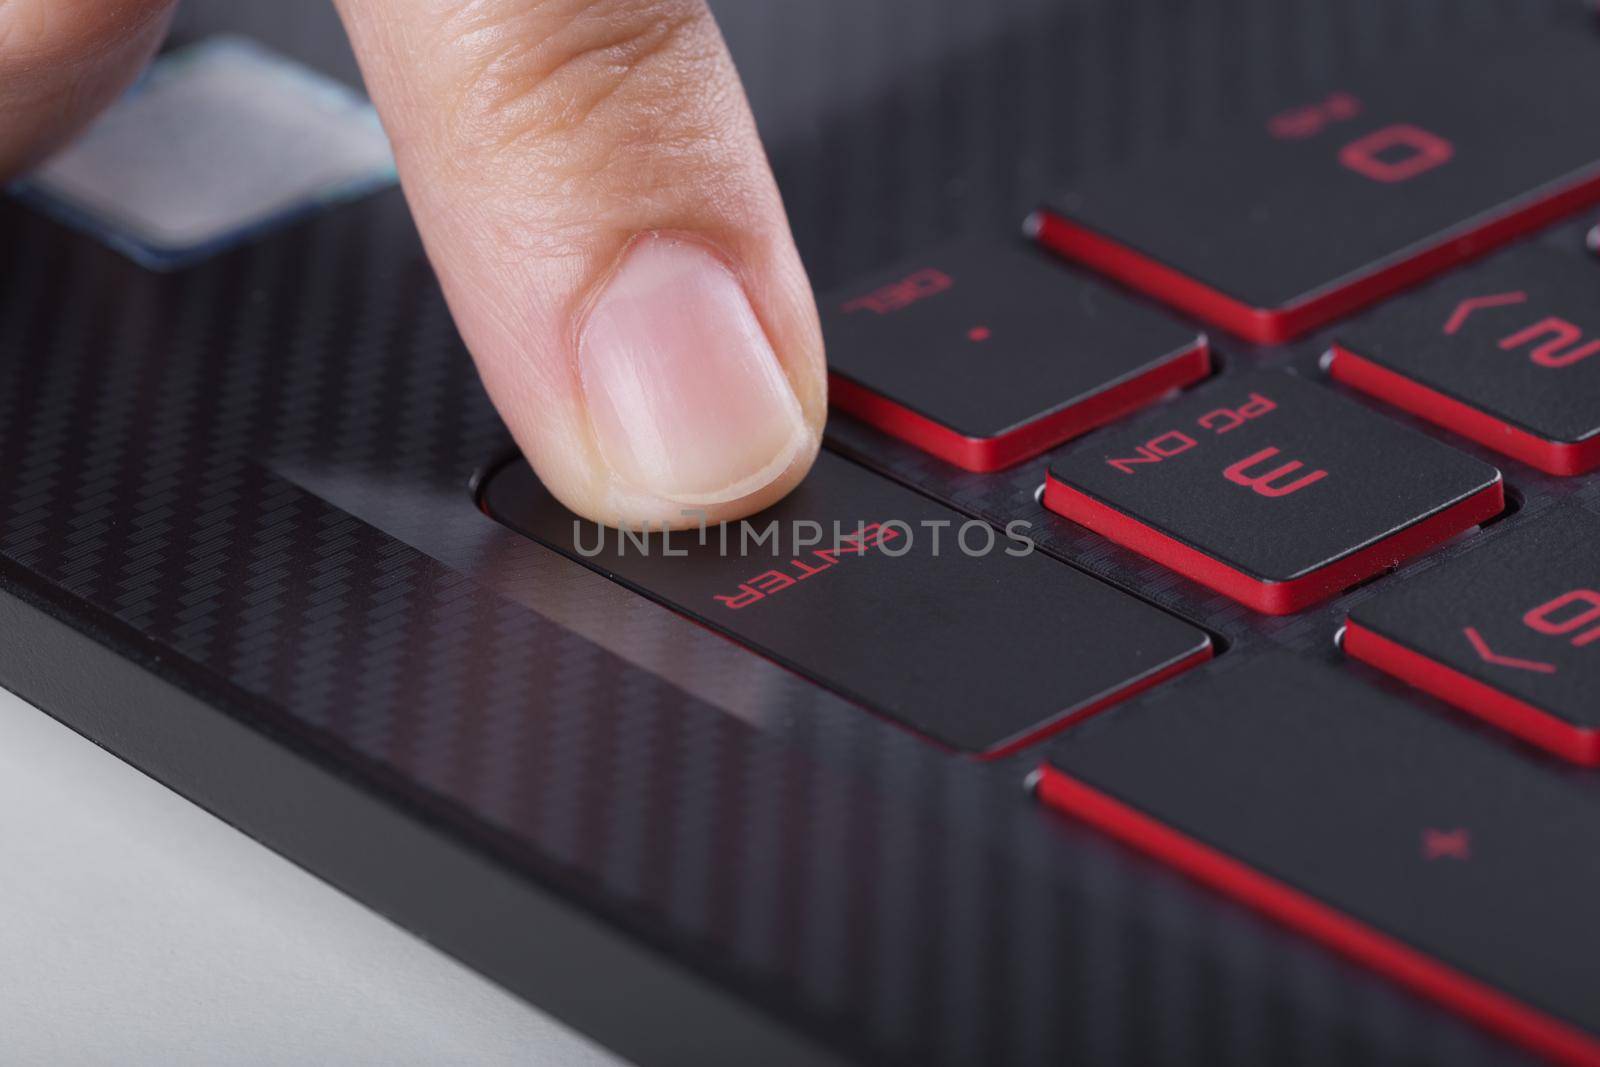 finger pushing enter button on laptop keyboard by geargodz